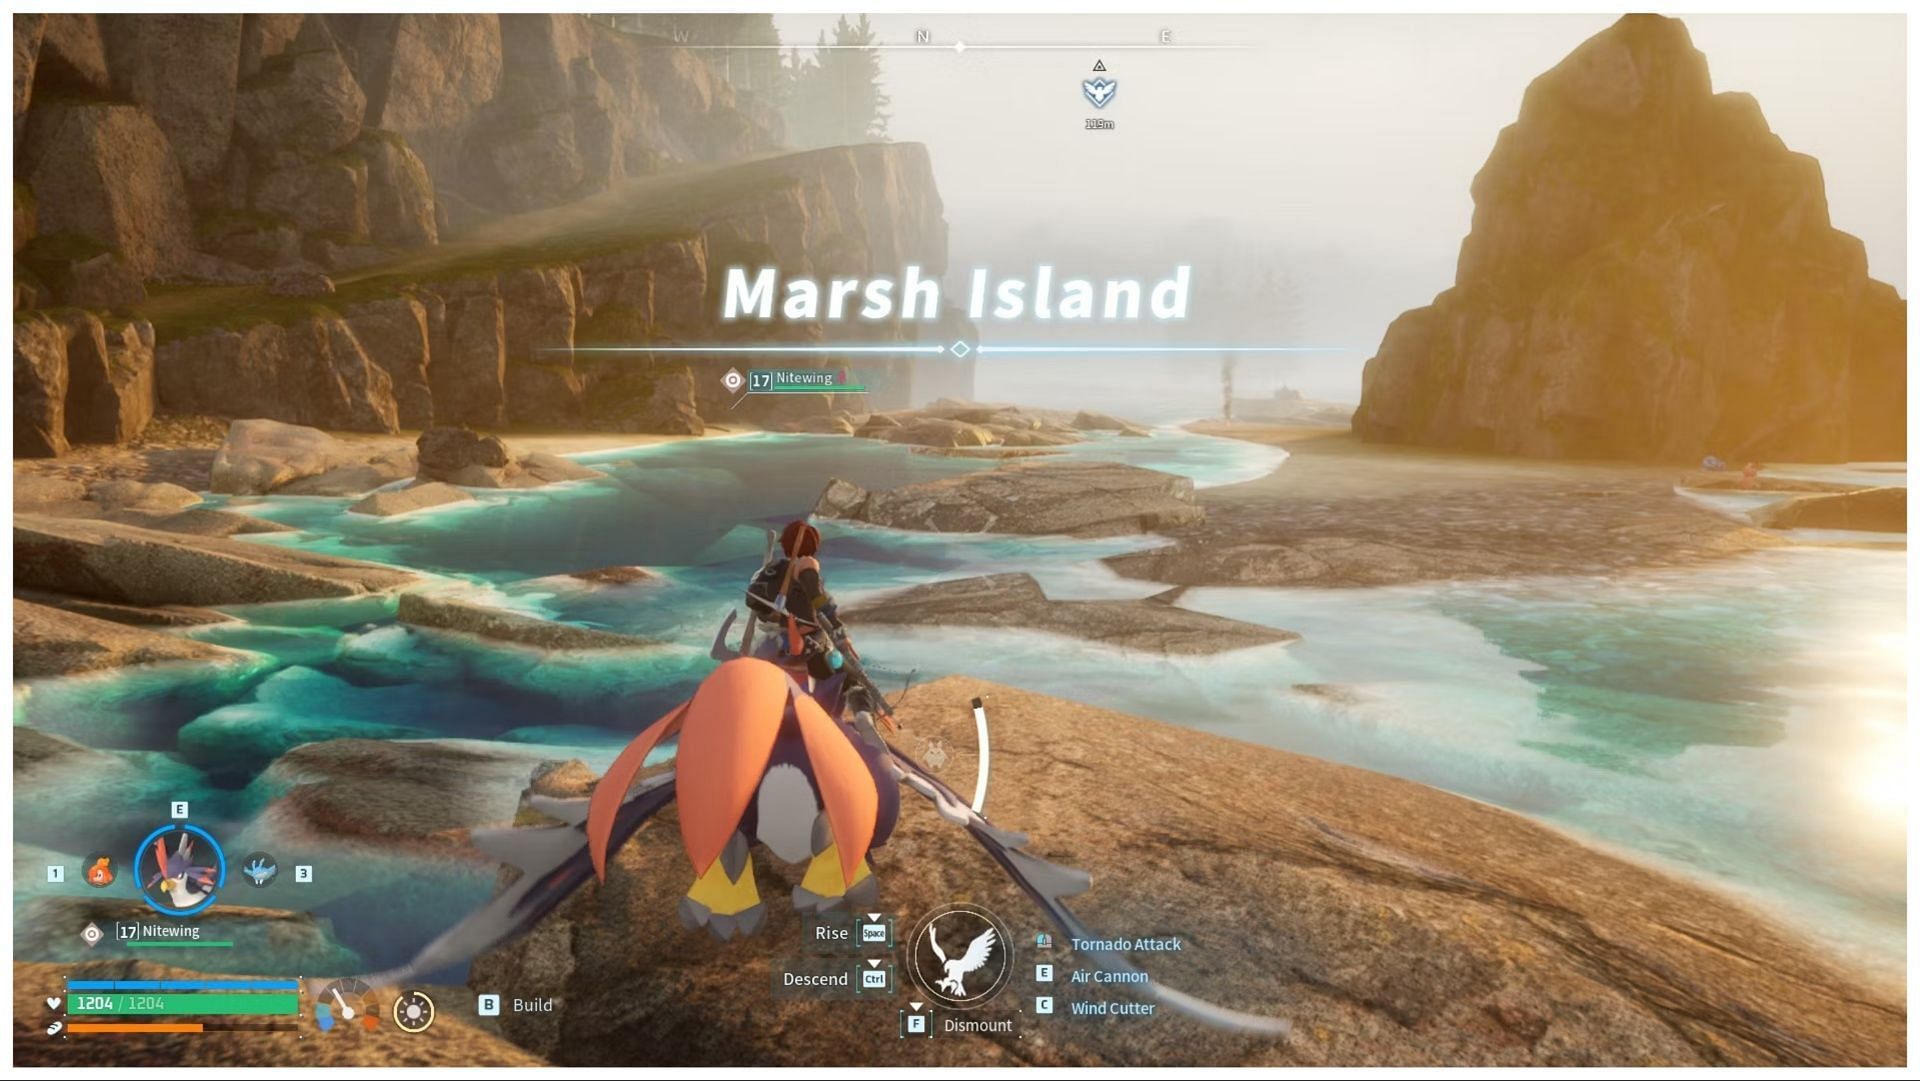 Marsh Island, as seen in the game. (Image via Pocket Pair, Inc.)